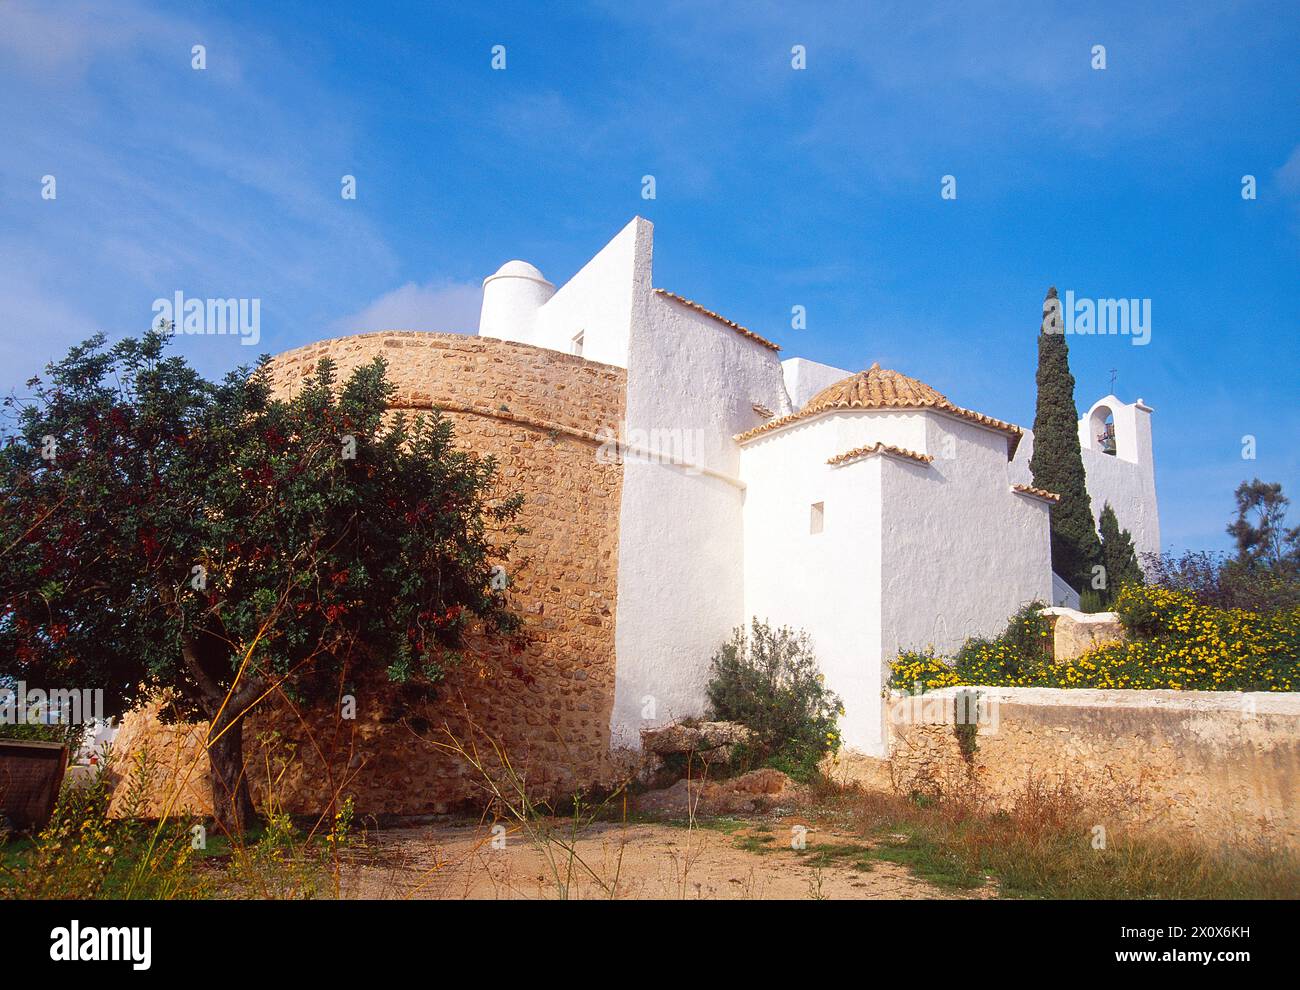 Puig de Missa. Santa Eularia des Riu, Ibiza island, Balearic Islands, Spain. Stock Photo